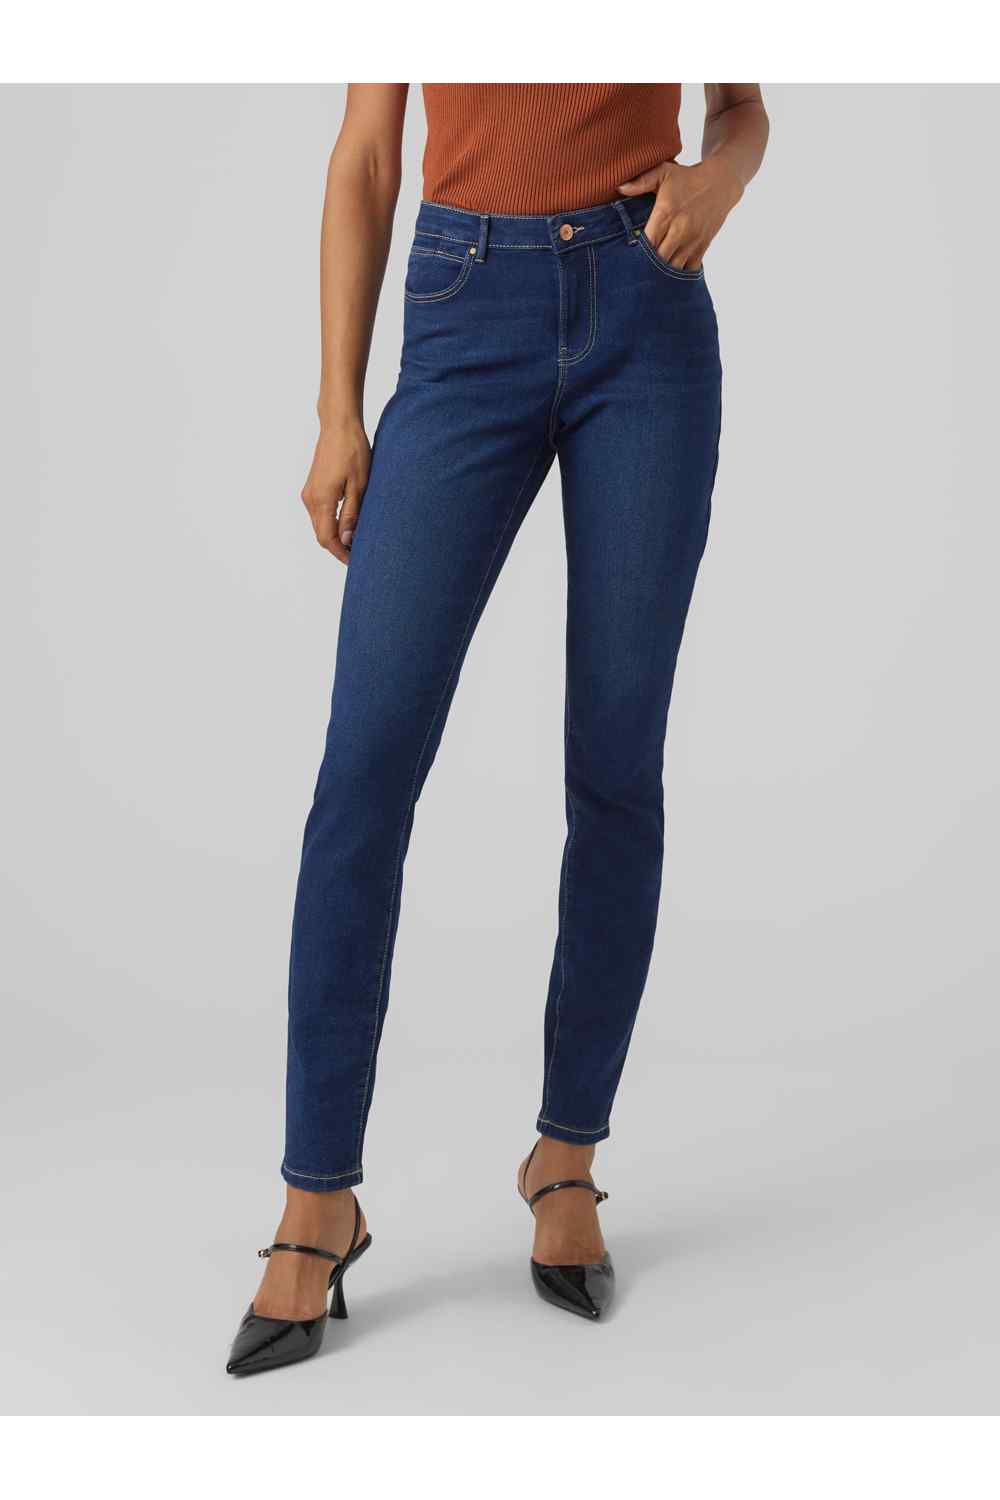 Vero Moda June Skinny Jean - Blue 1 Shaws Department Stores